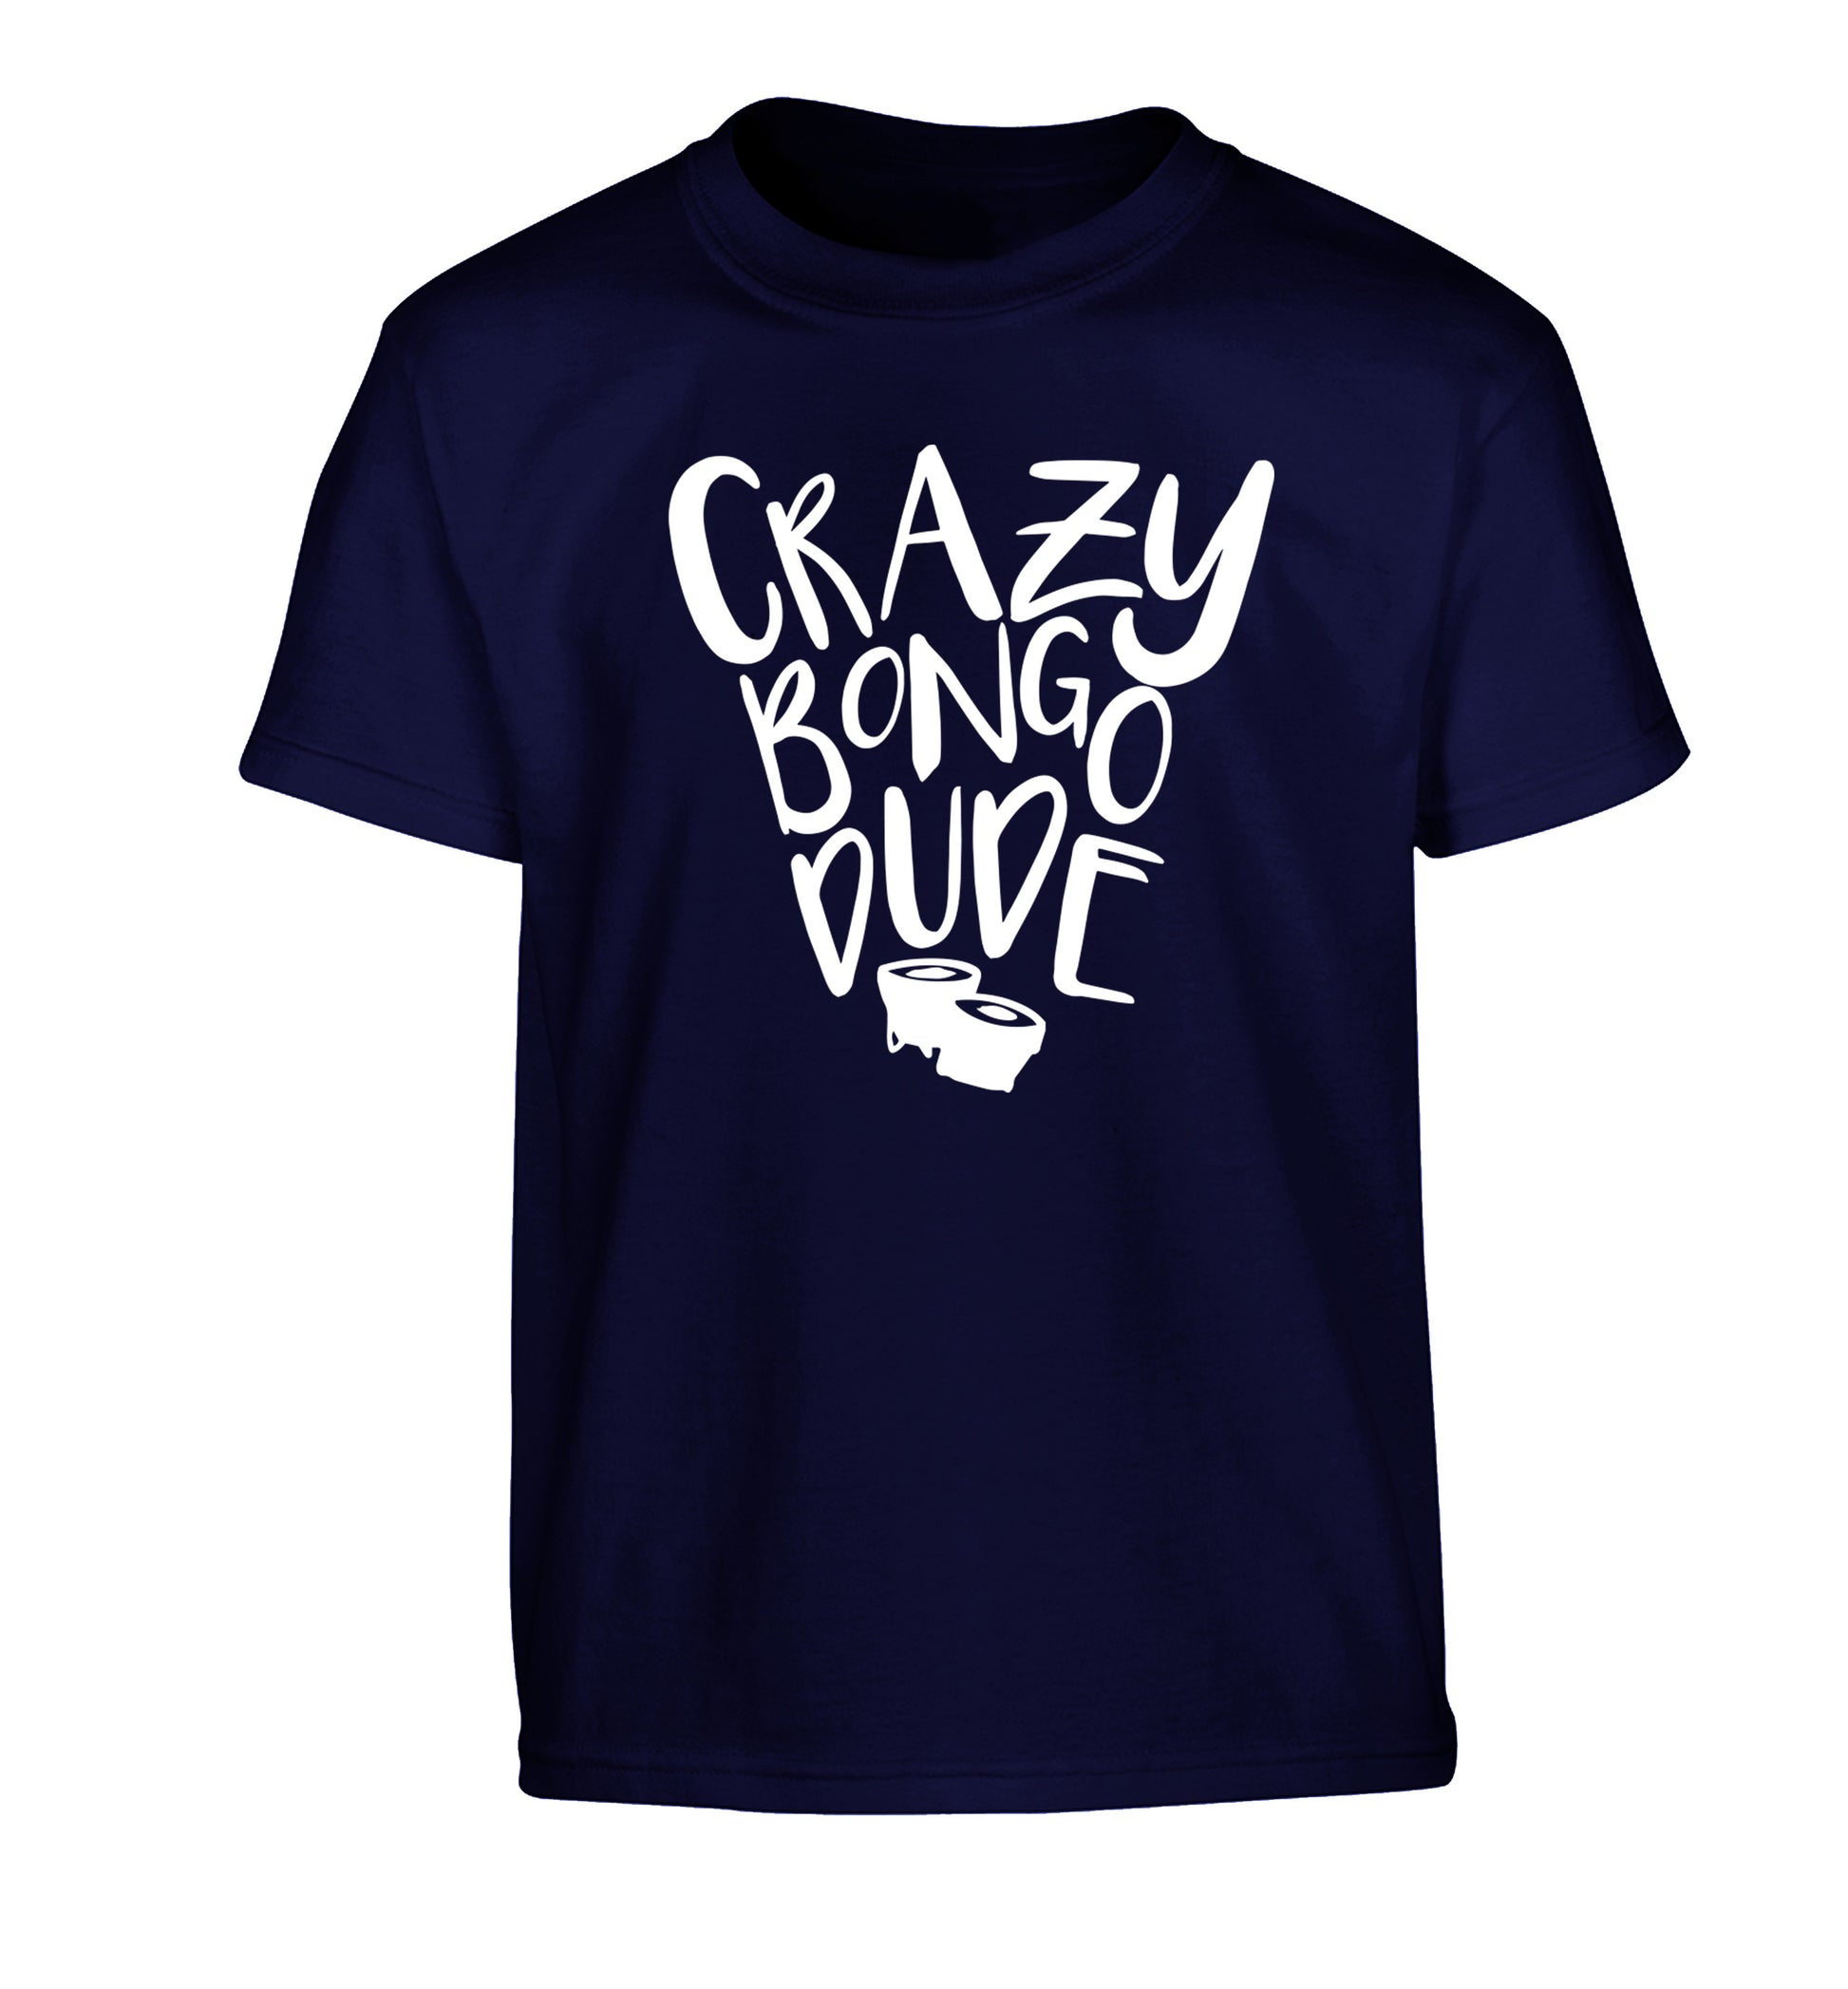 Crazy bongo dude Children's navy Tshirt 12-14 Years